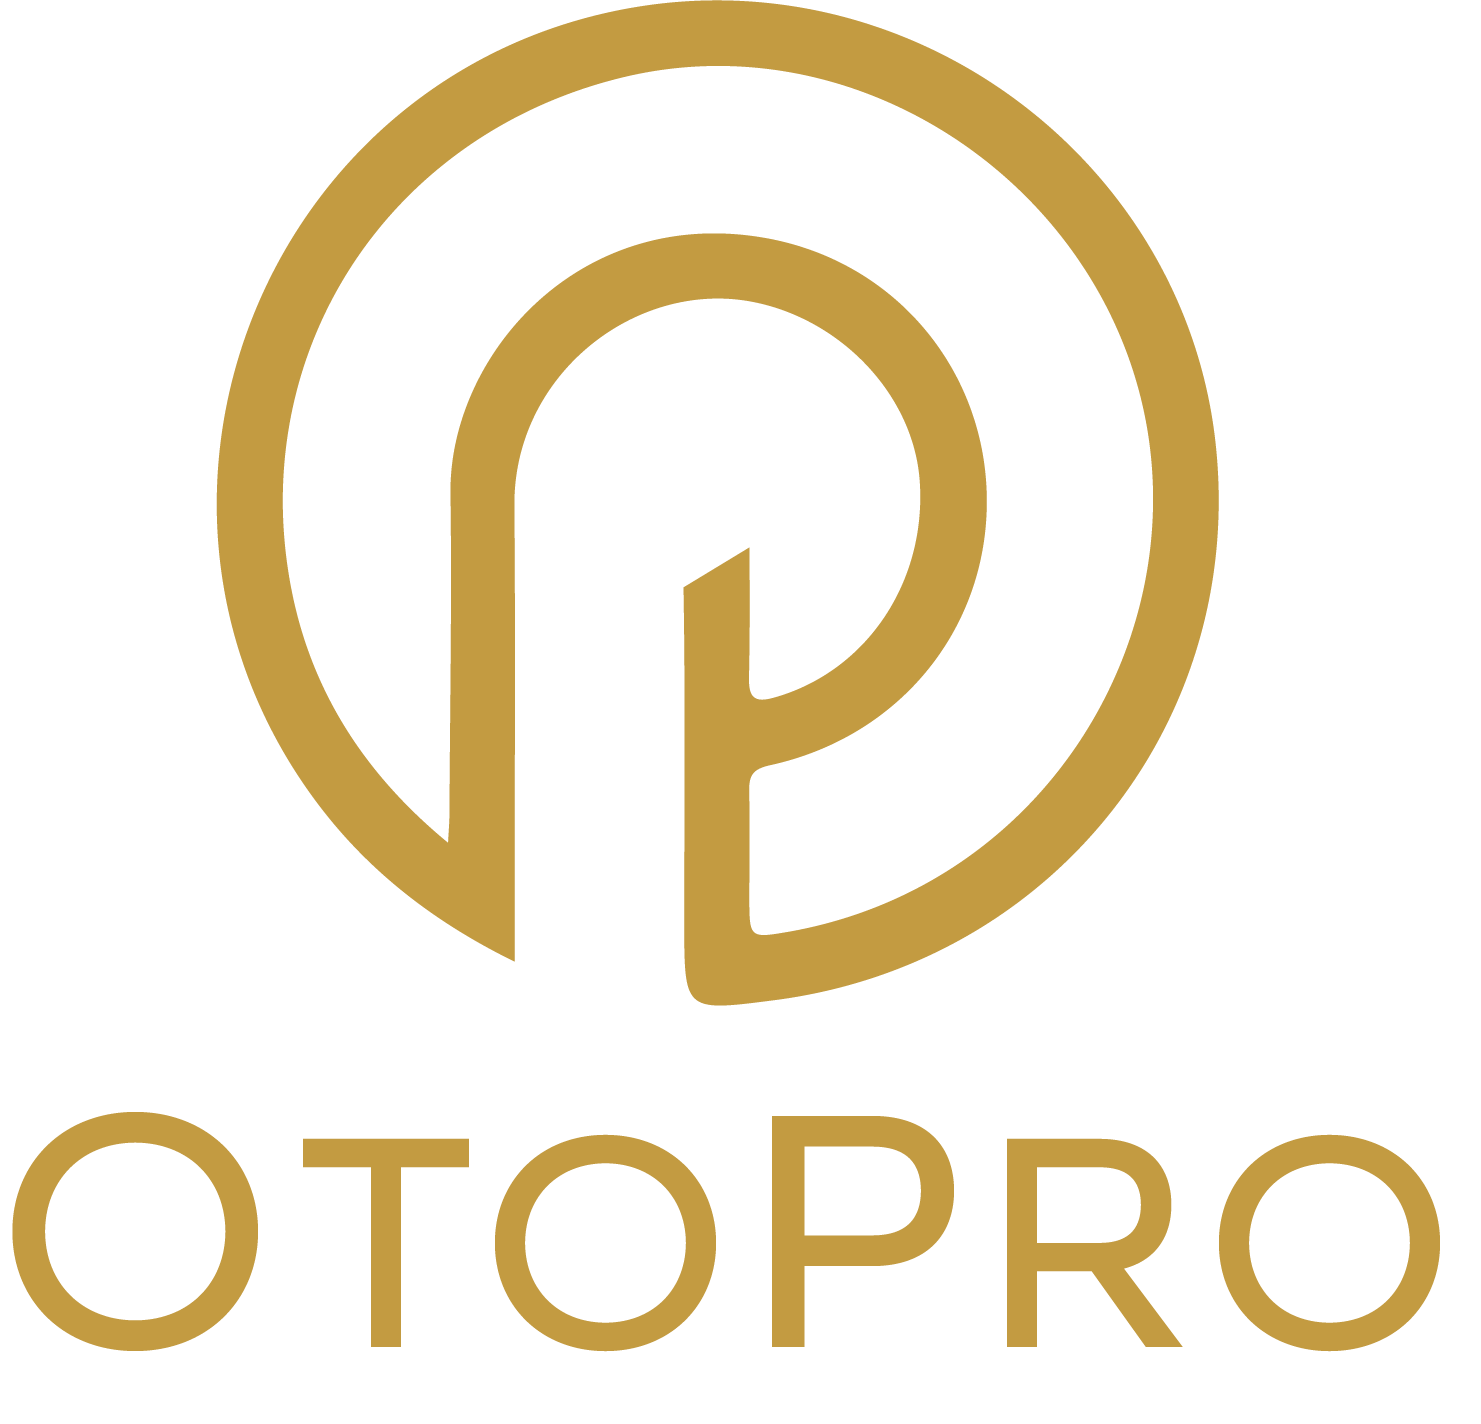 OtoPro Technologies